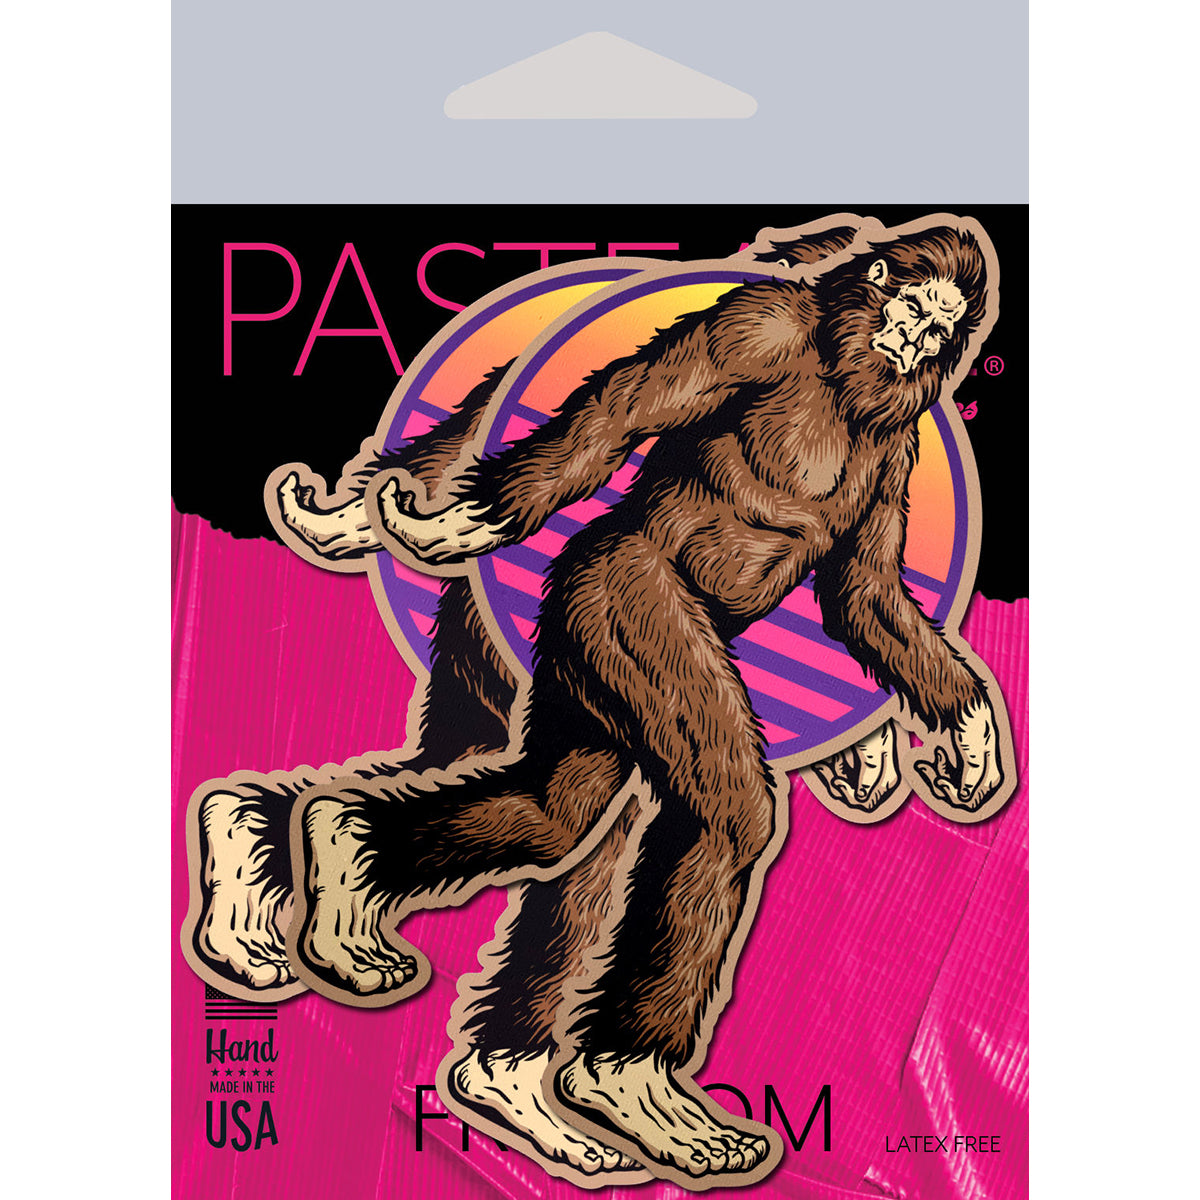 Pastease Sasquatch Bigfoot Intimates Adult Boutique